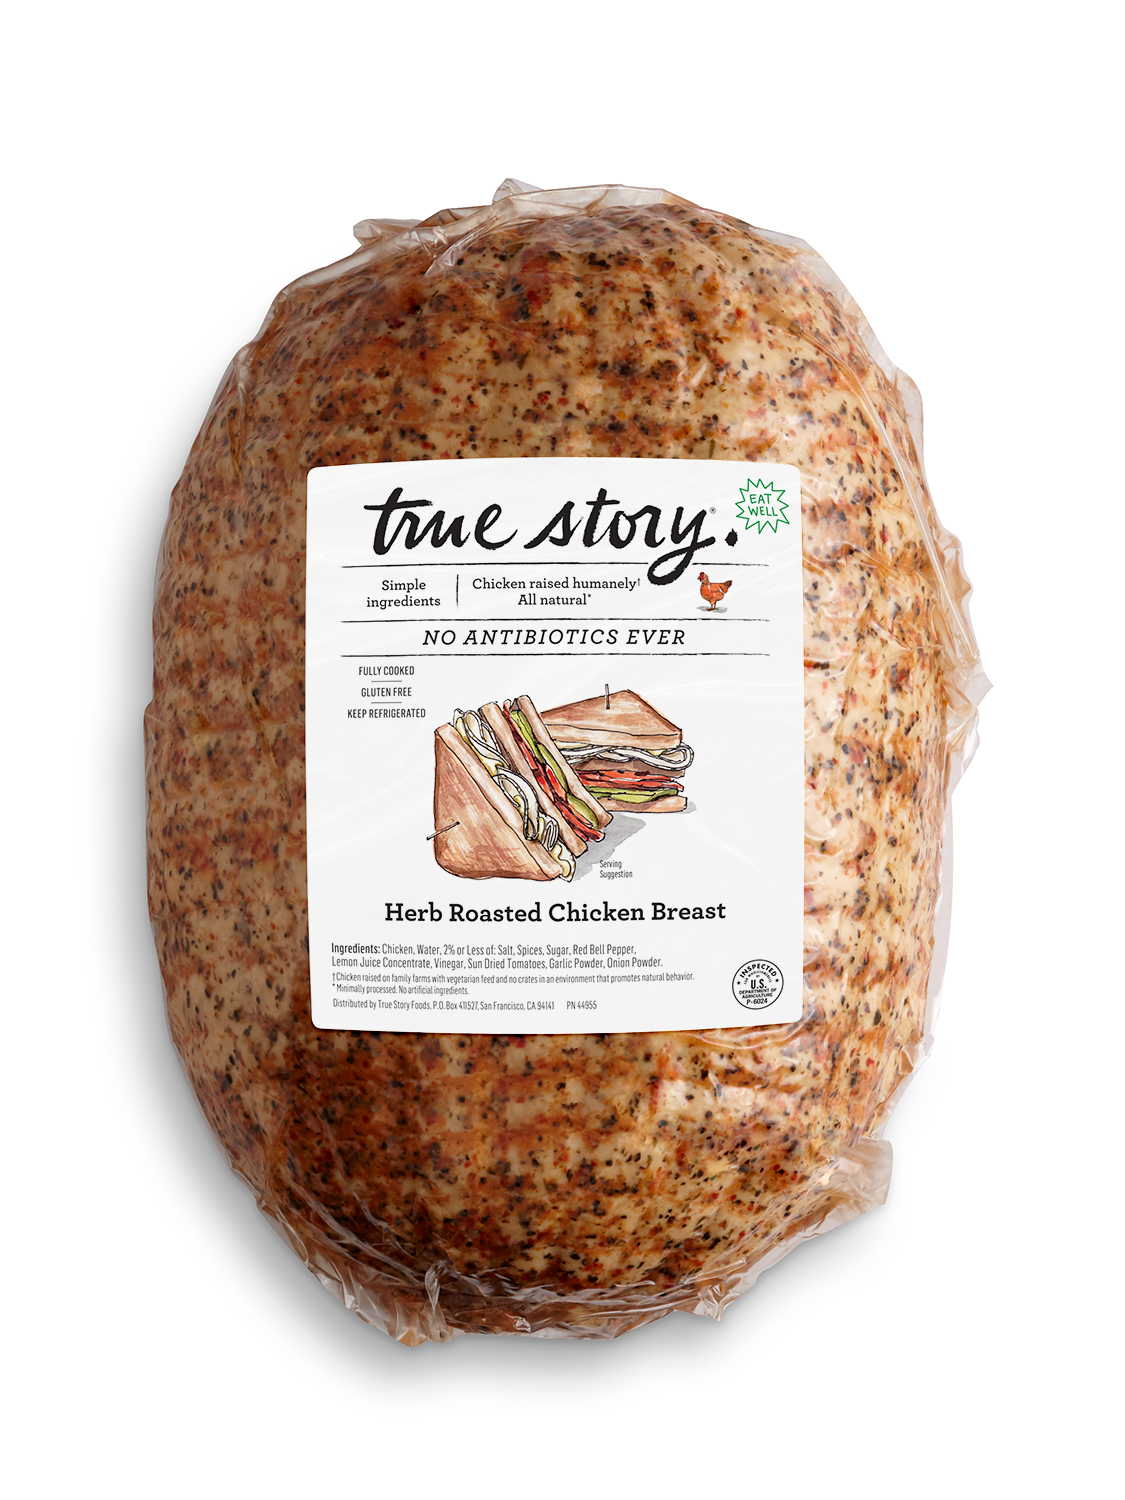 Herb Roasted Chicken Breast Packaging